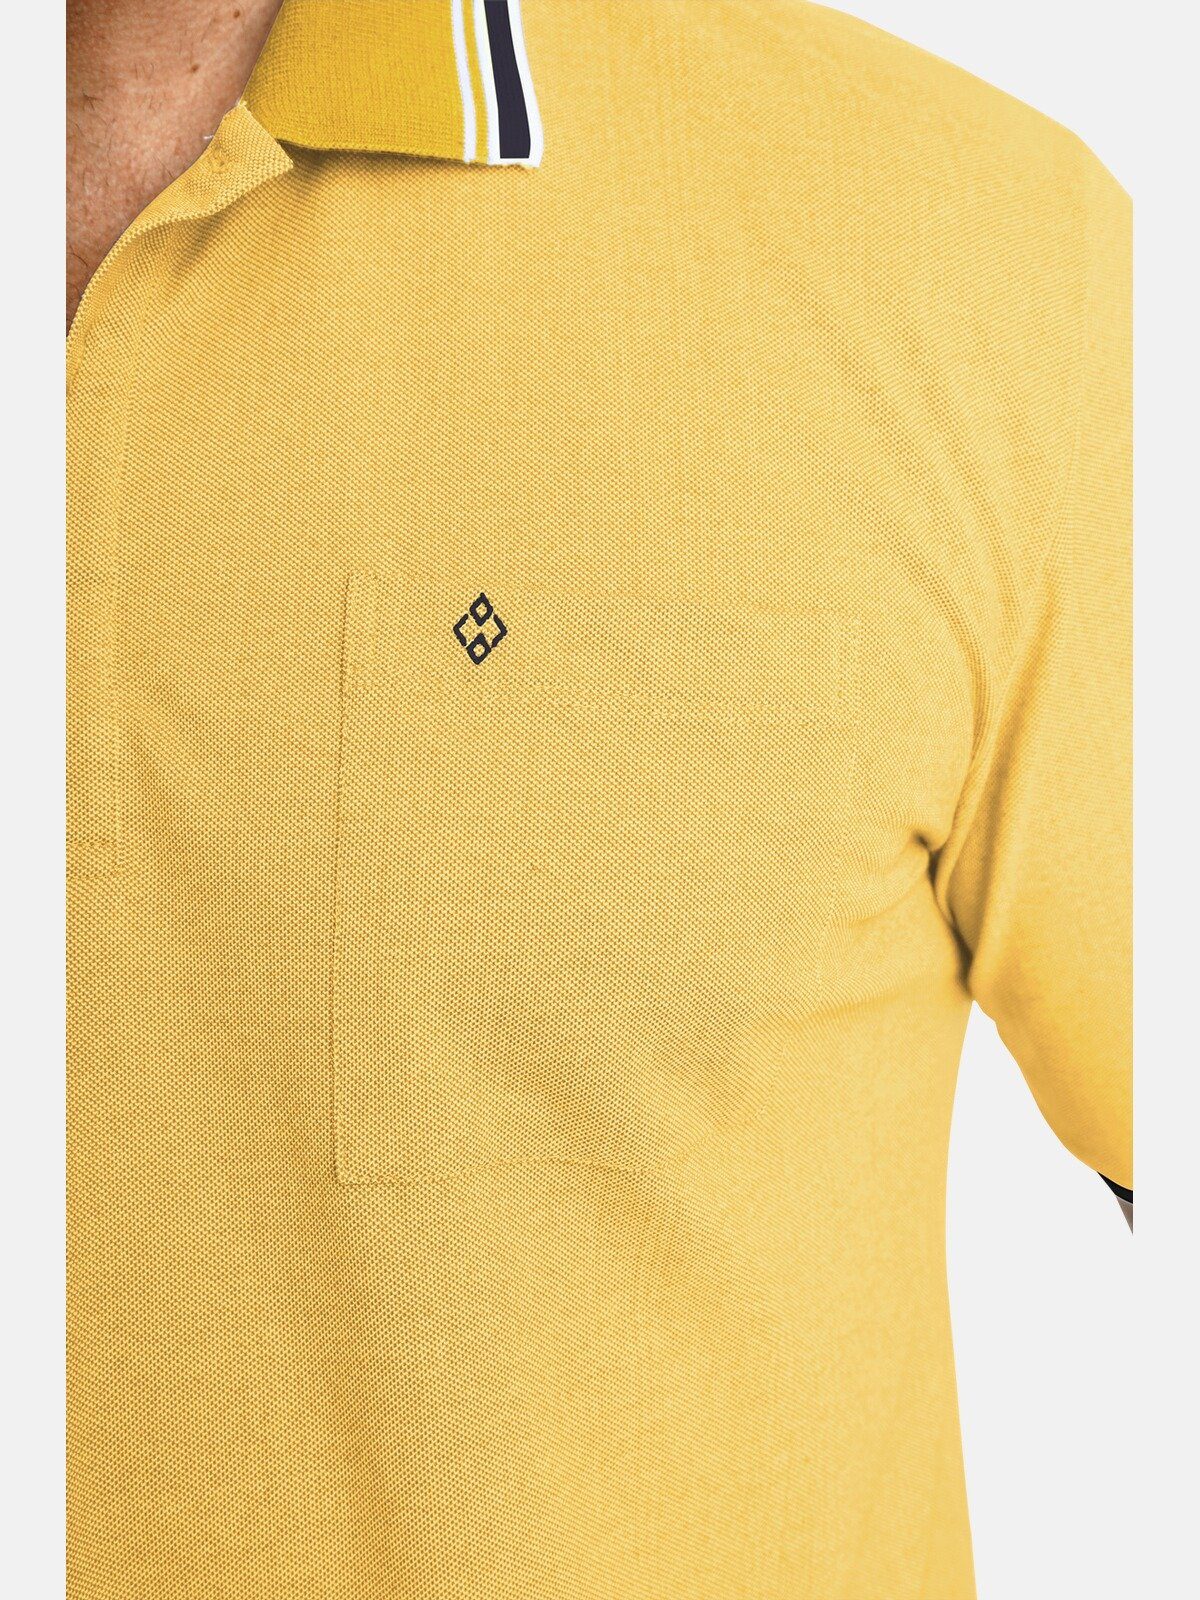 Colby LANDON EARL Charles aus gelb two-tone Poloshirt Pikee